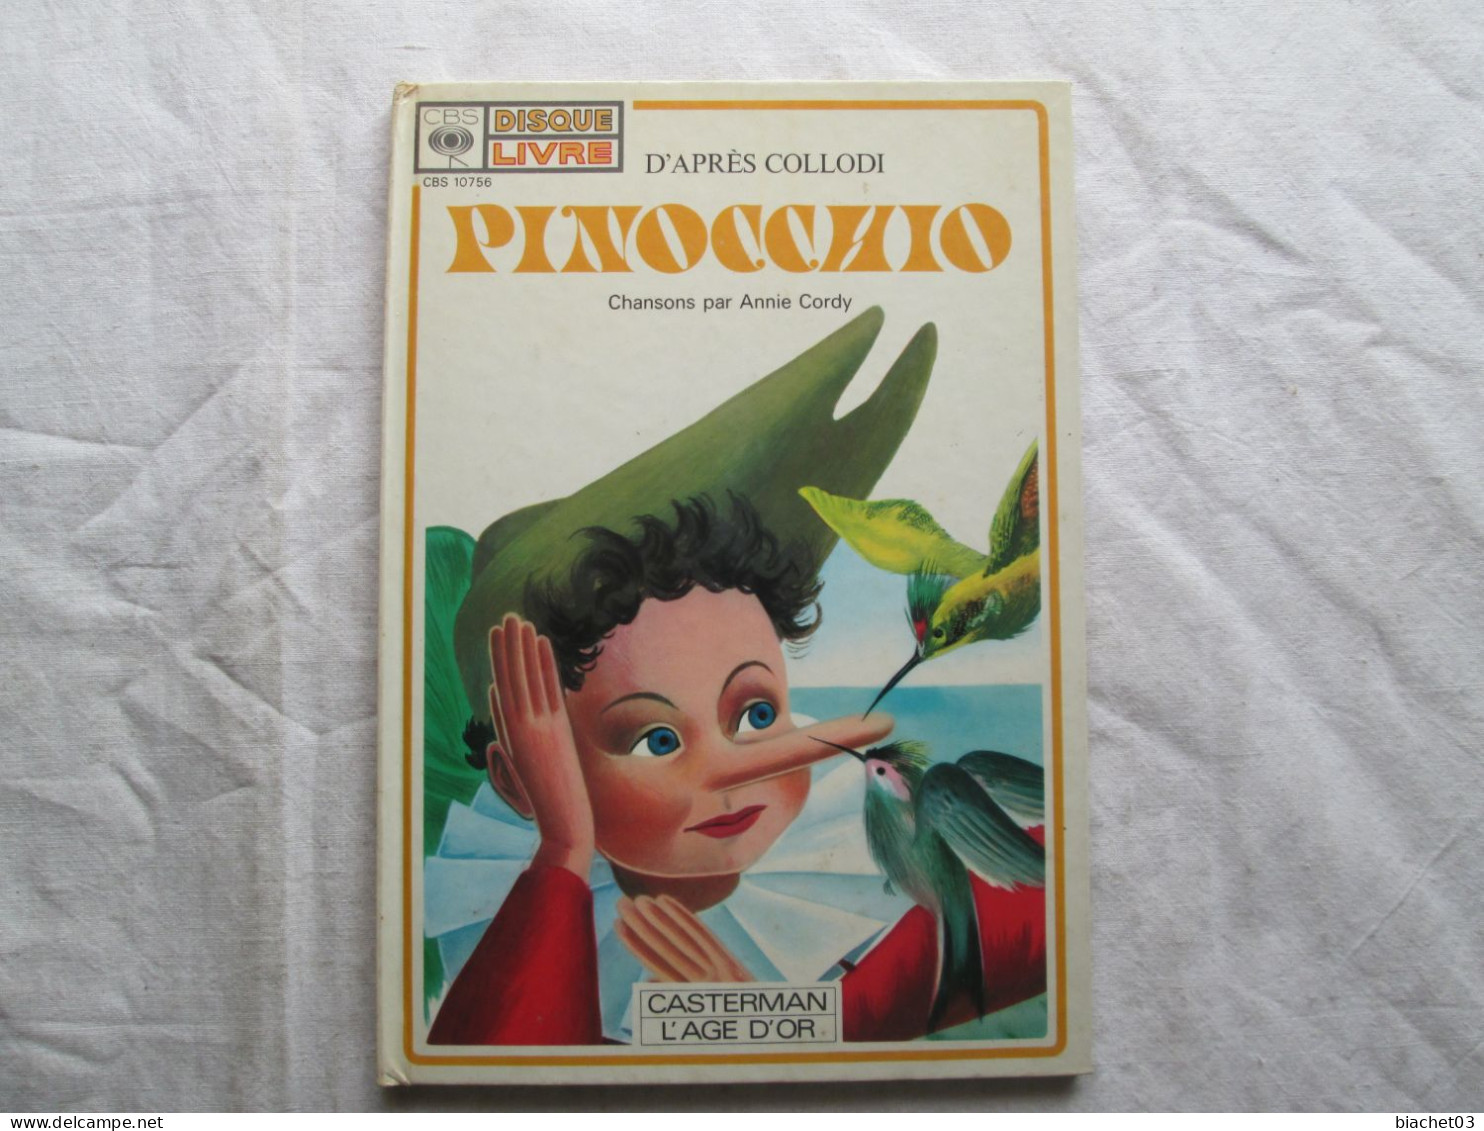 Livre-disque  (Pinocchio) - Bambini